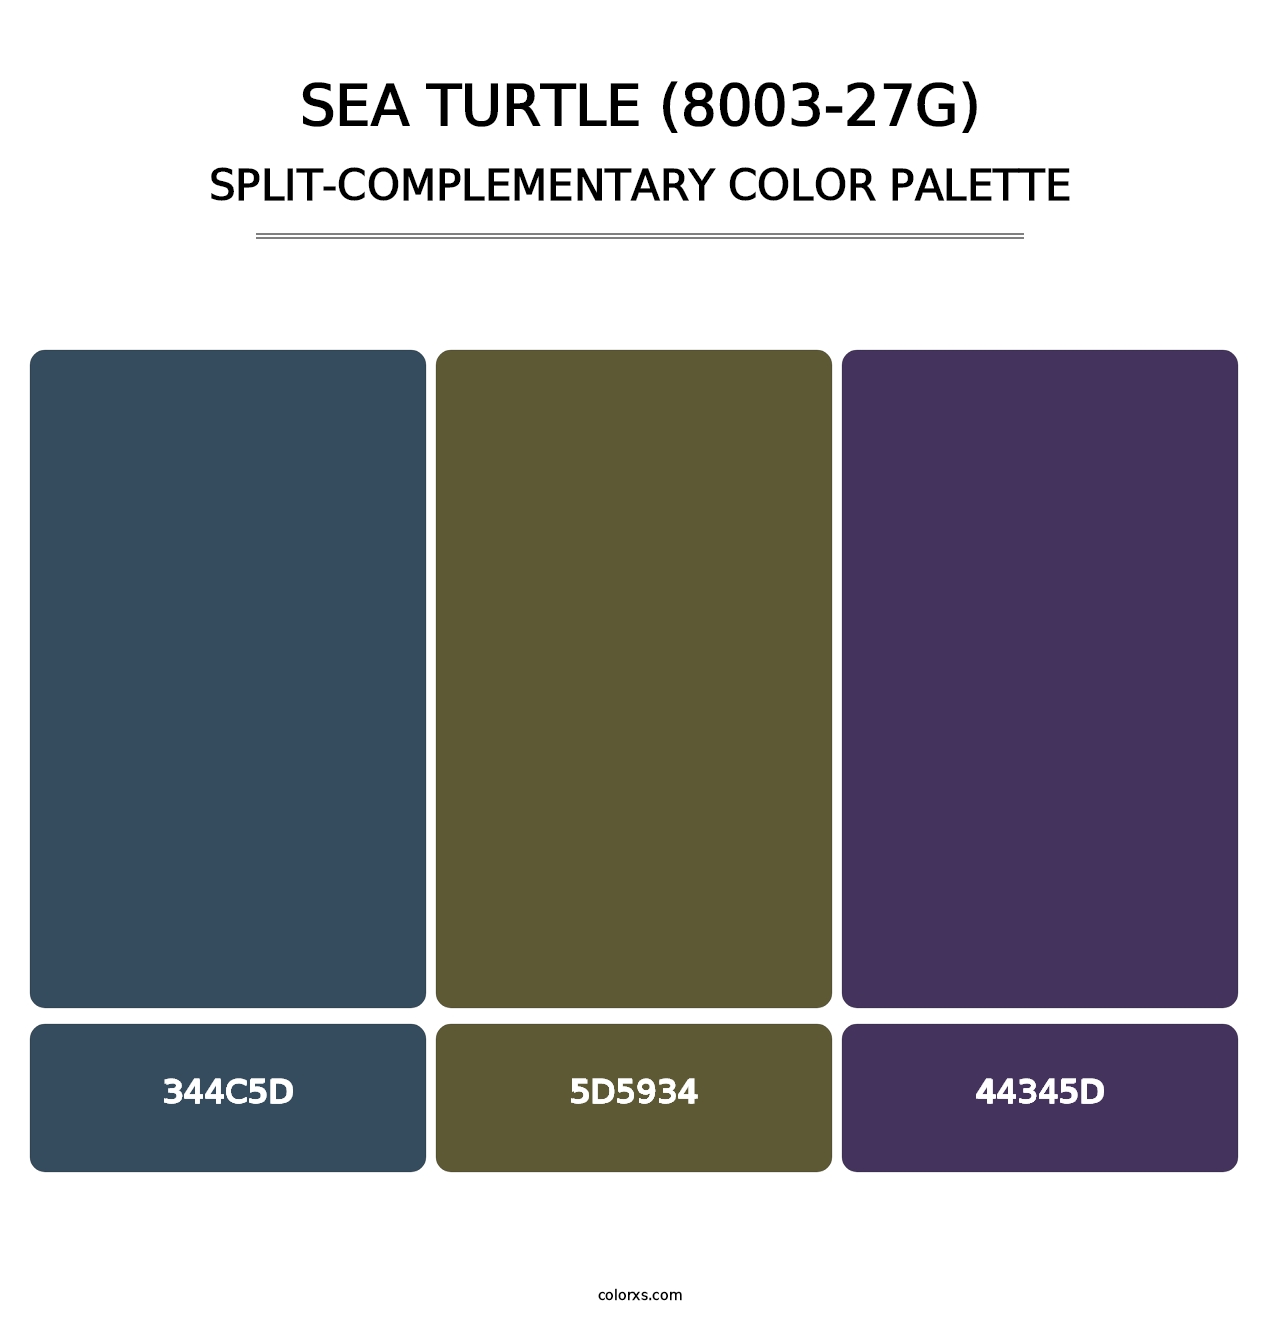 Sea Turtle (8003-27G) - Split-Complementary Color Palette